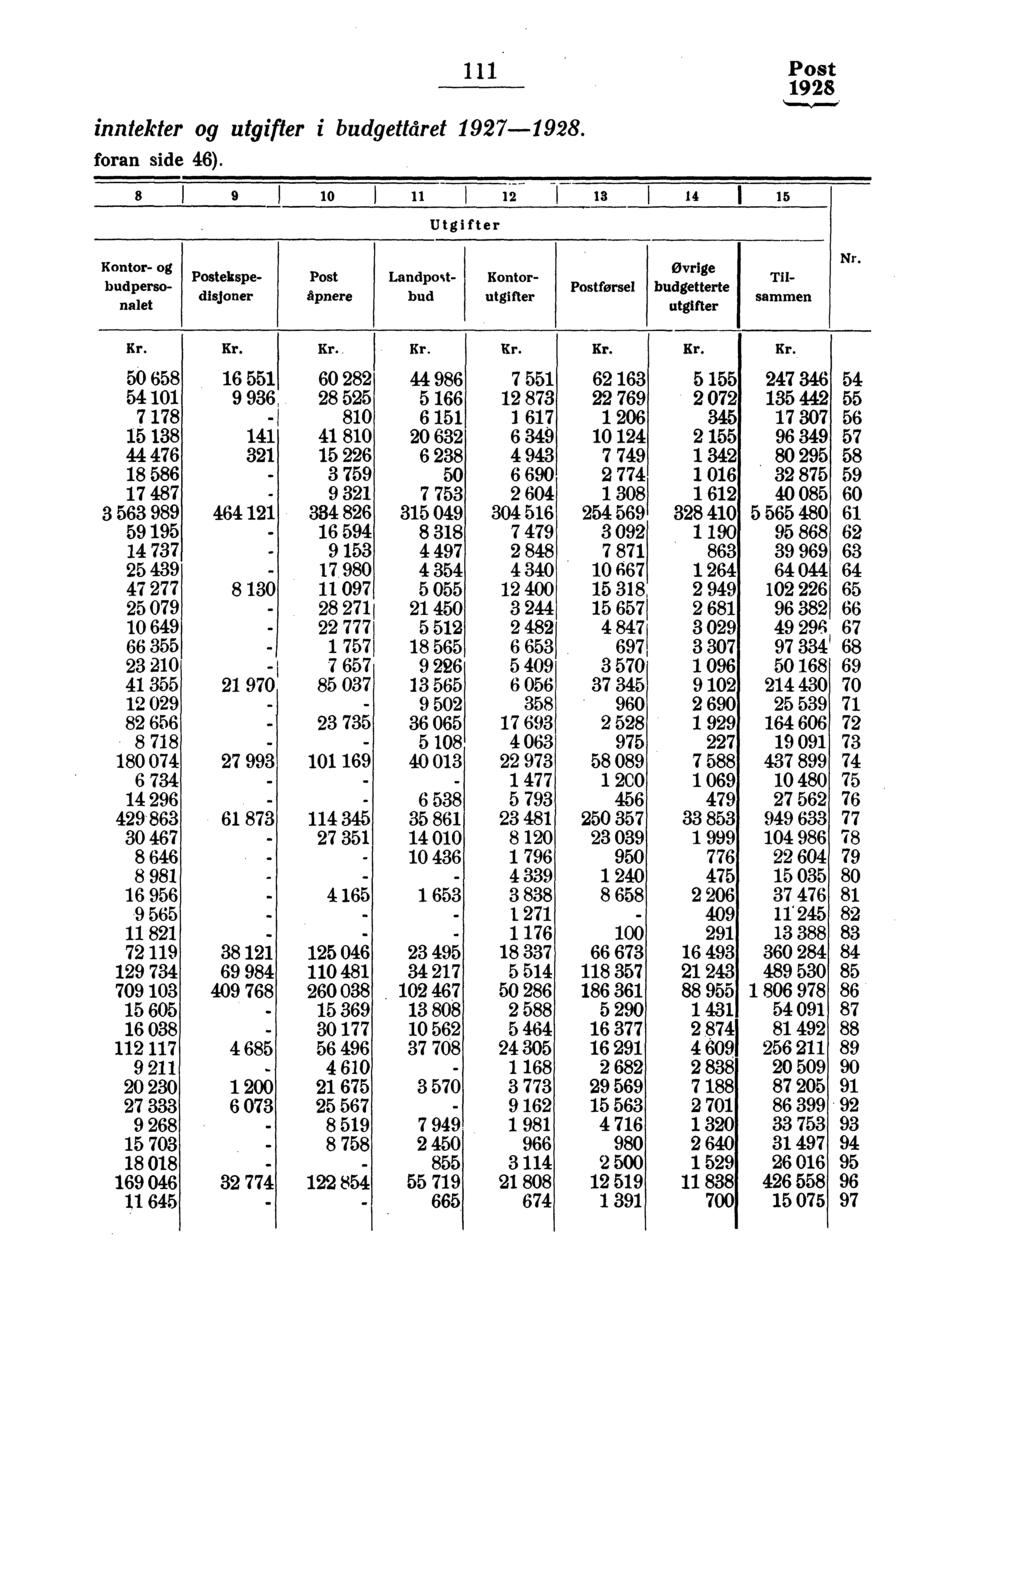 inntekter og utgifter i budgettåret 97-. foran side 46).